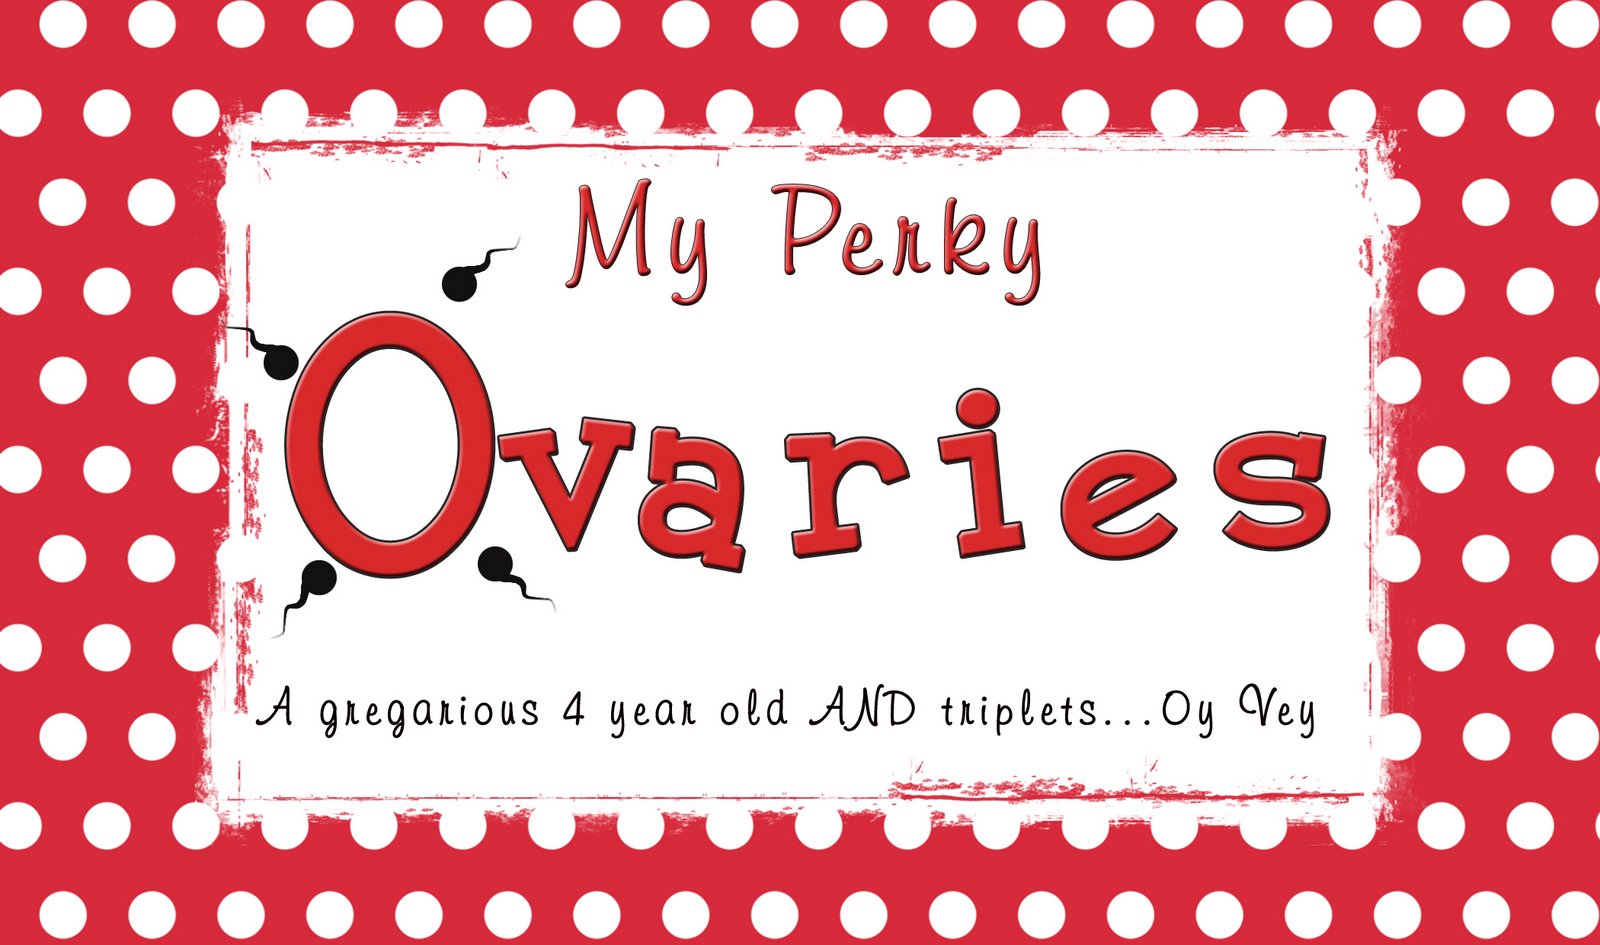 My Perky Ovaries